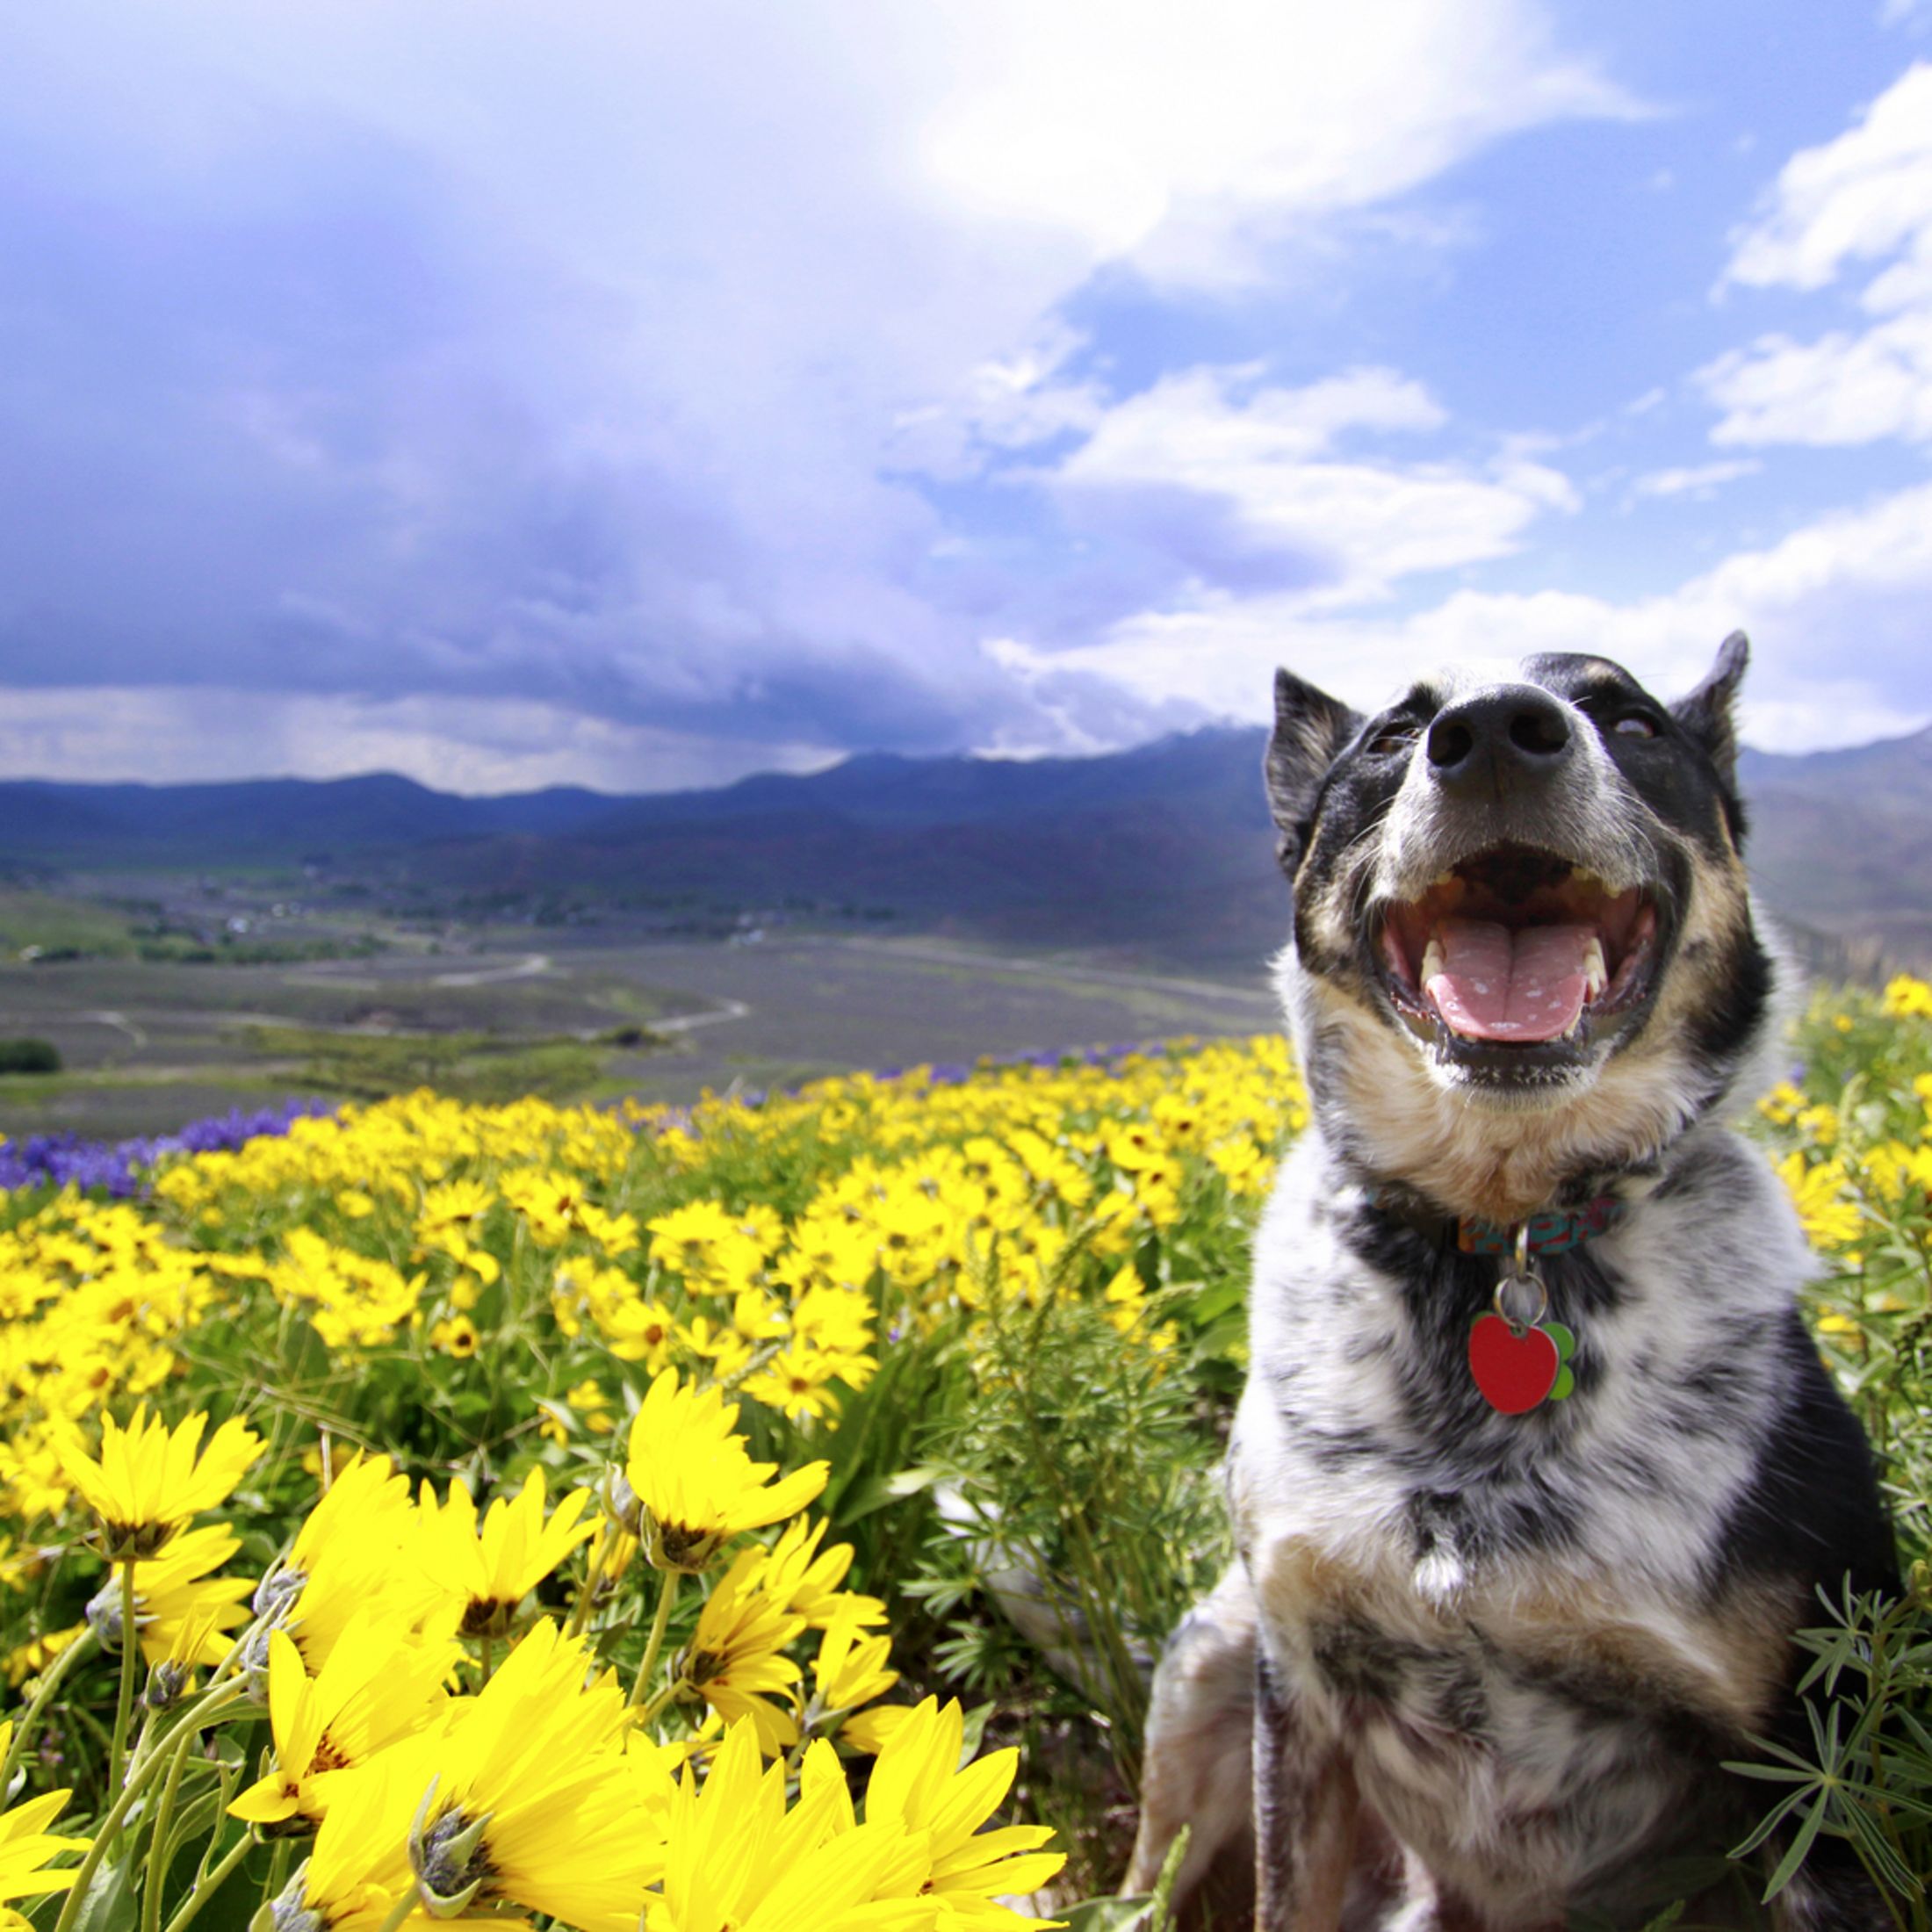 Rocket the dog frolics in a field of flowers in Colorado Gulch, Haley, Idaho.  